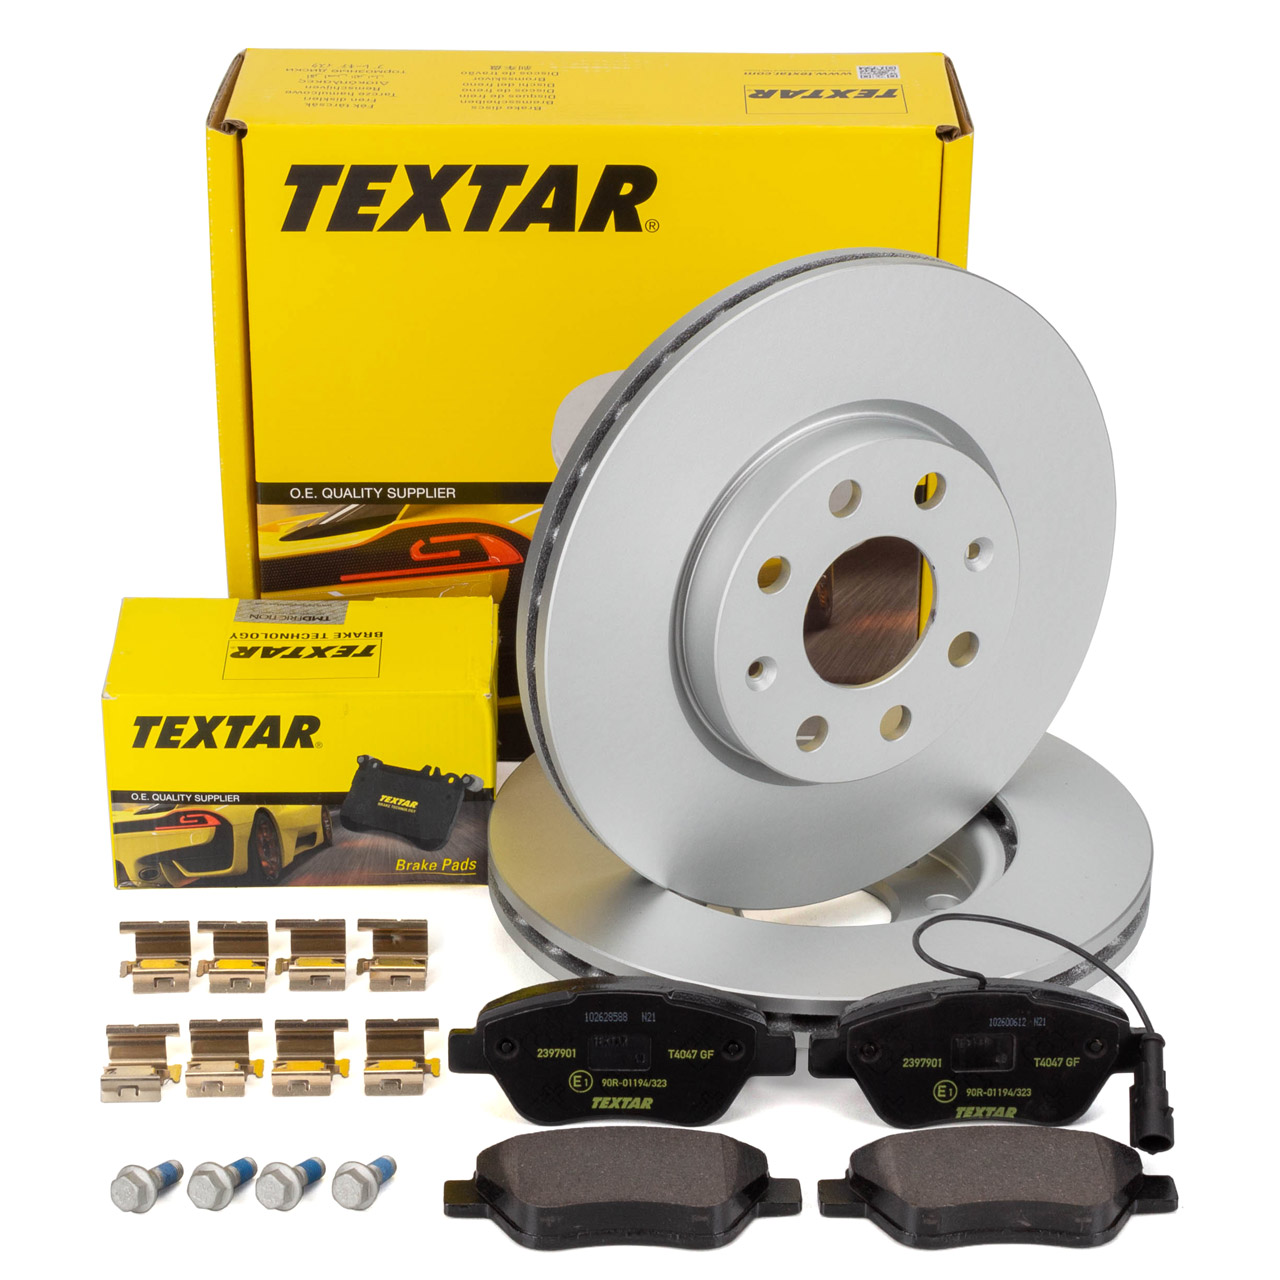 TEXTAR Bremsen Sets - 92145703, 2397901 